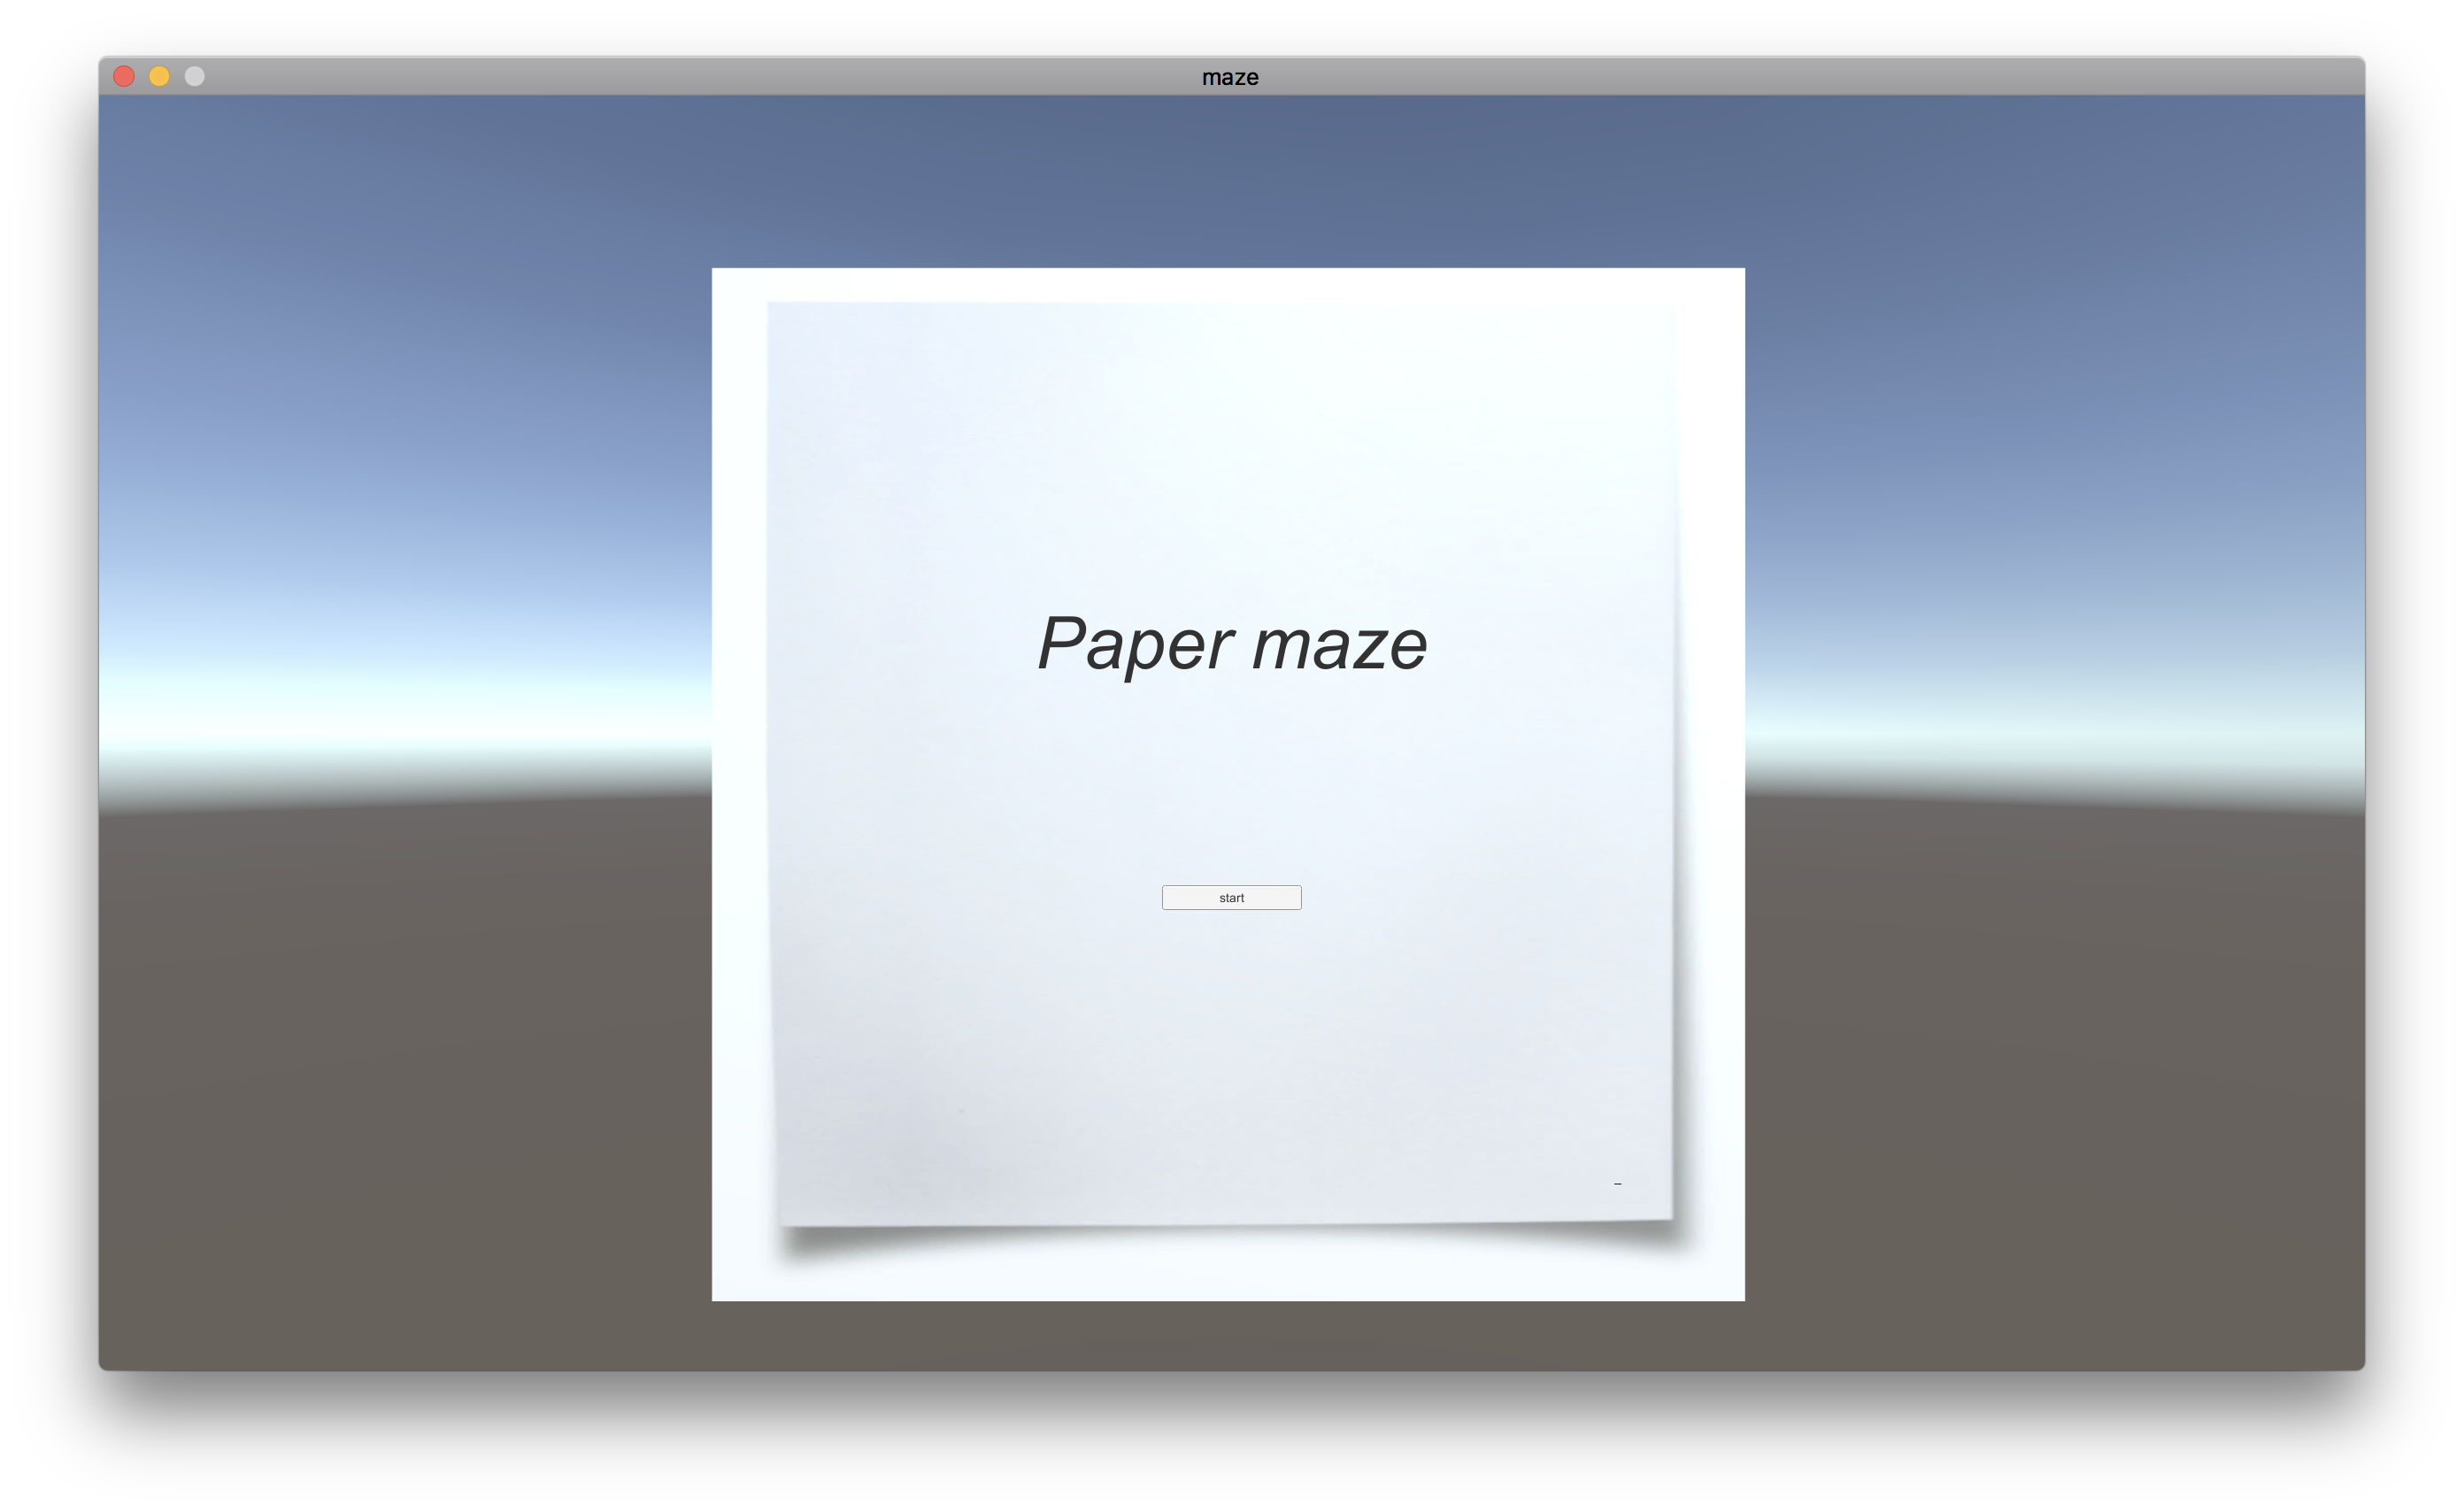 Paper maze